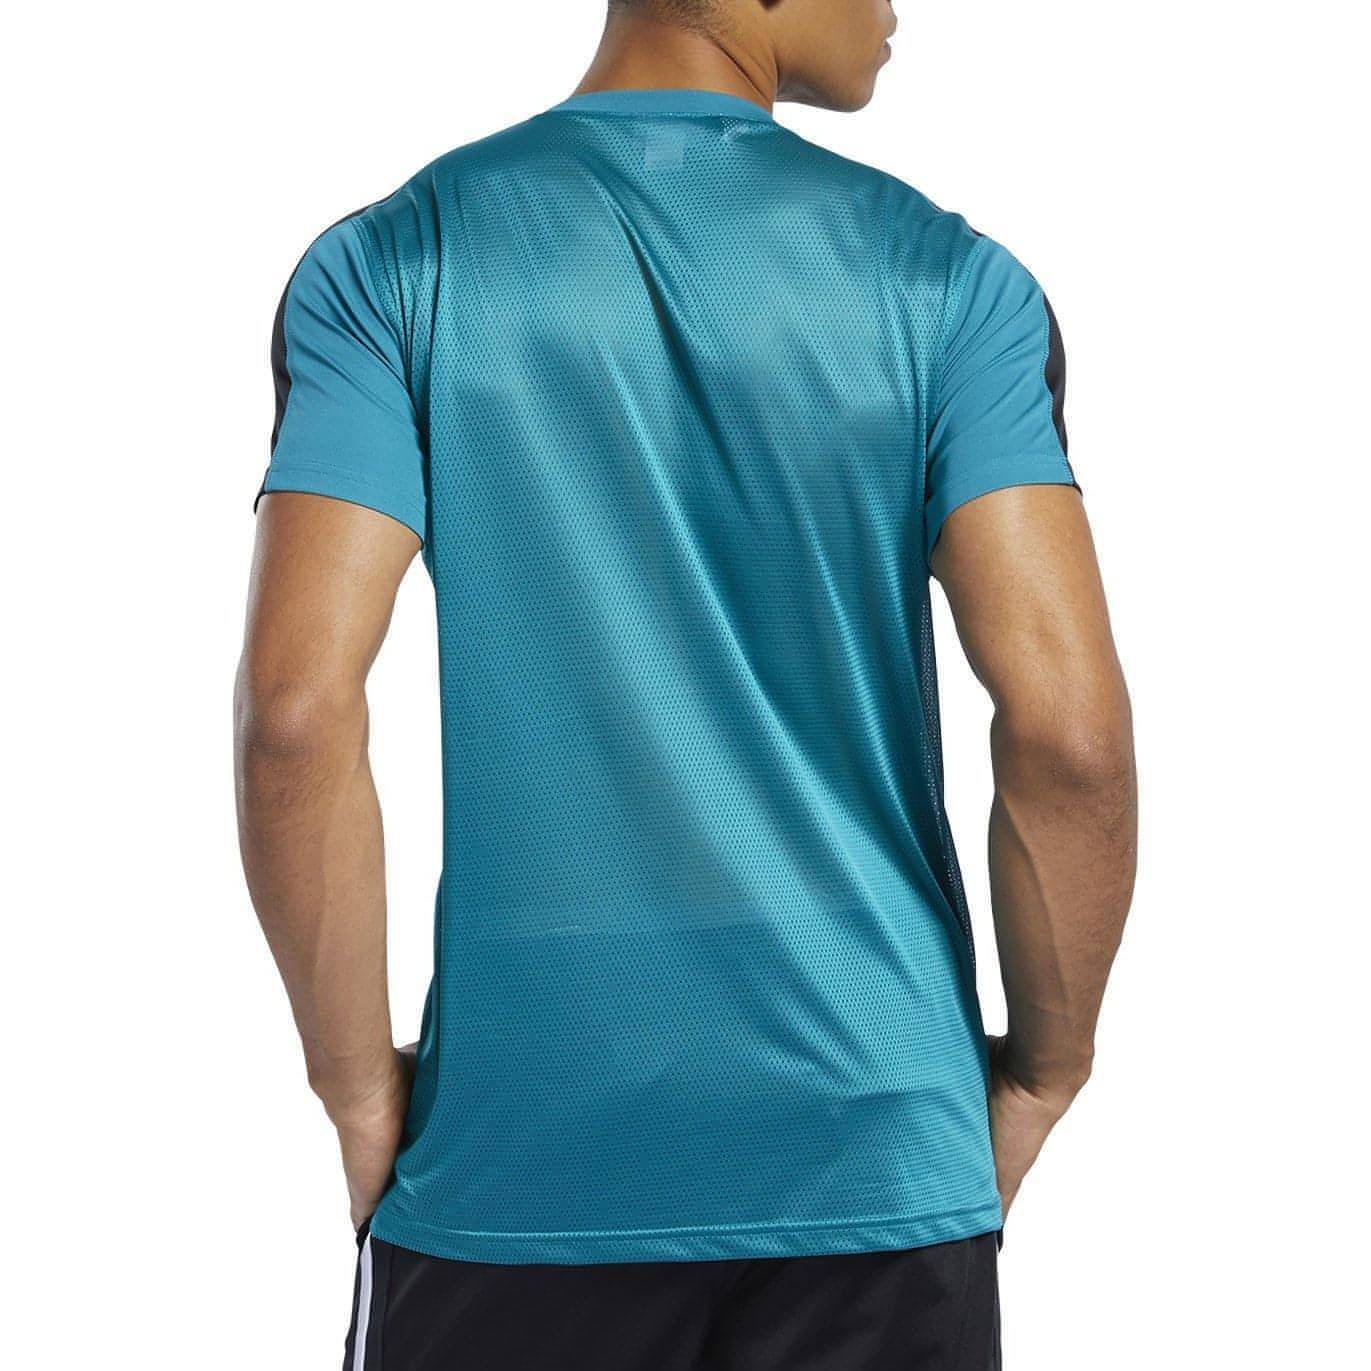 Reebok Workout Ready Short Sleeve Mens Training Top - Green - Start Fitness